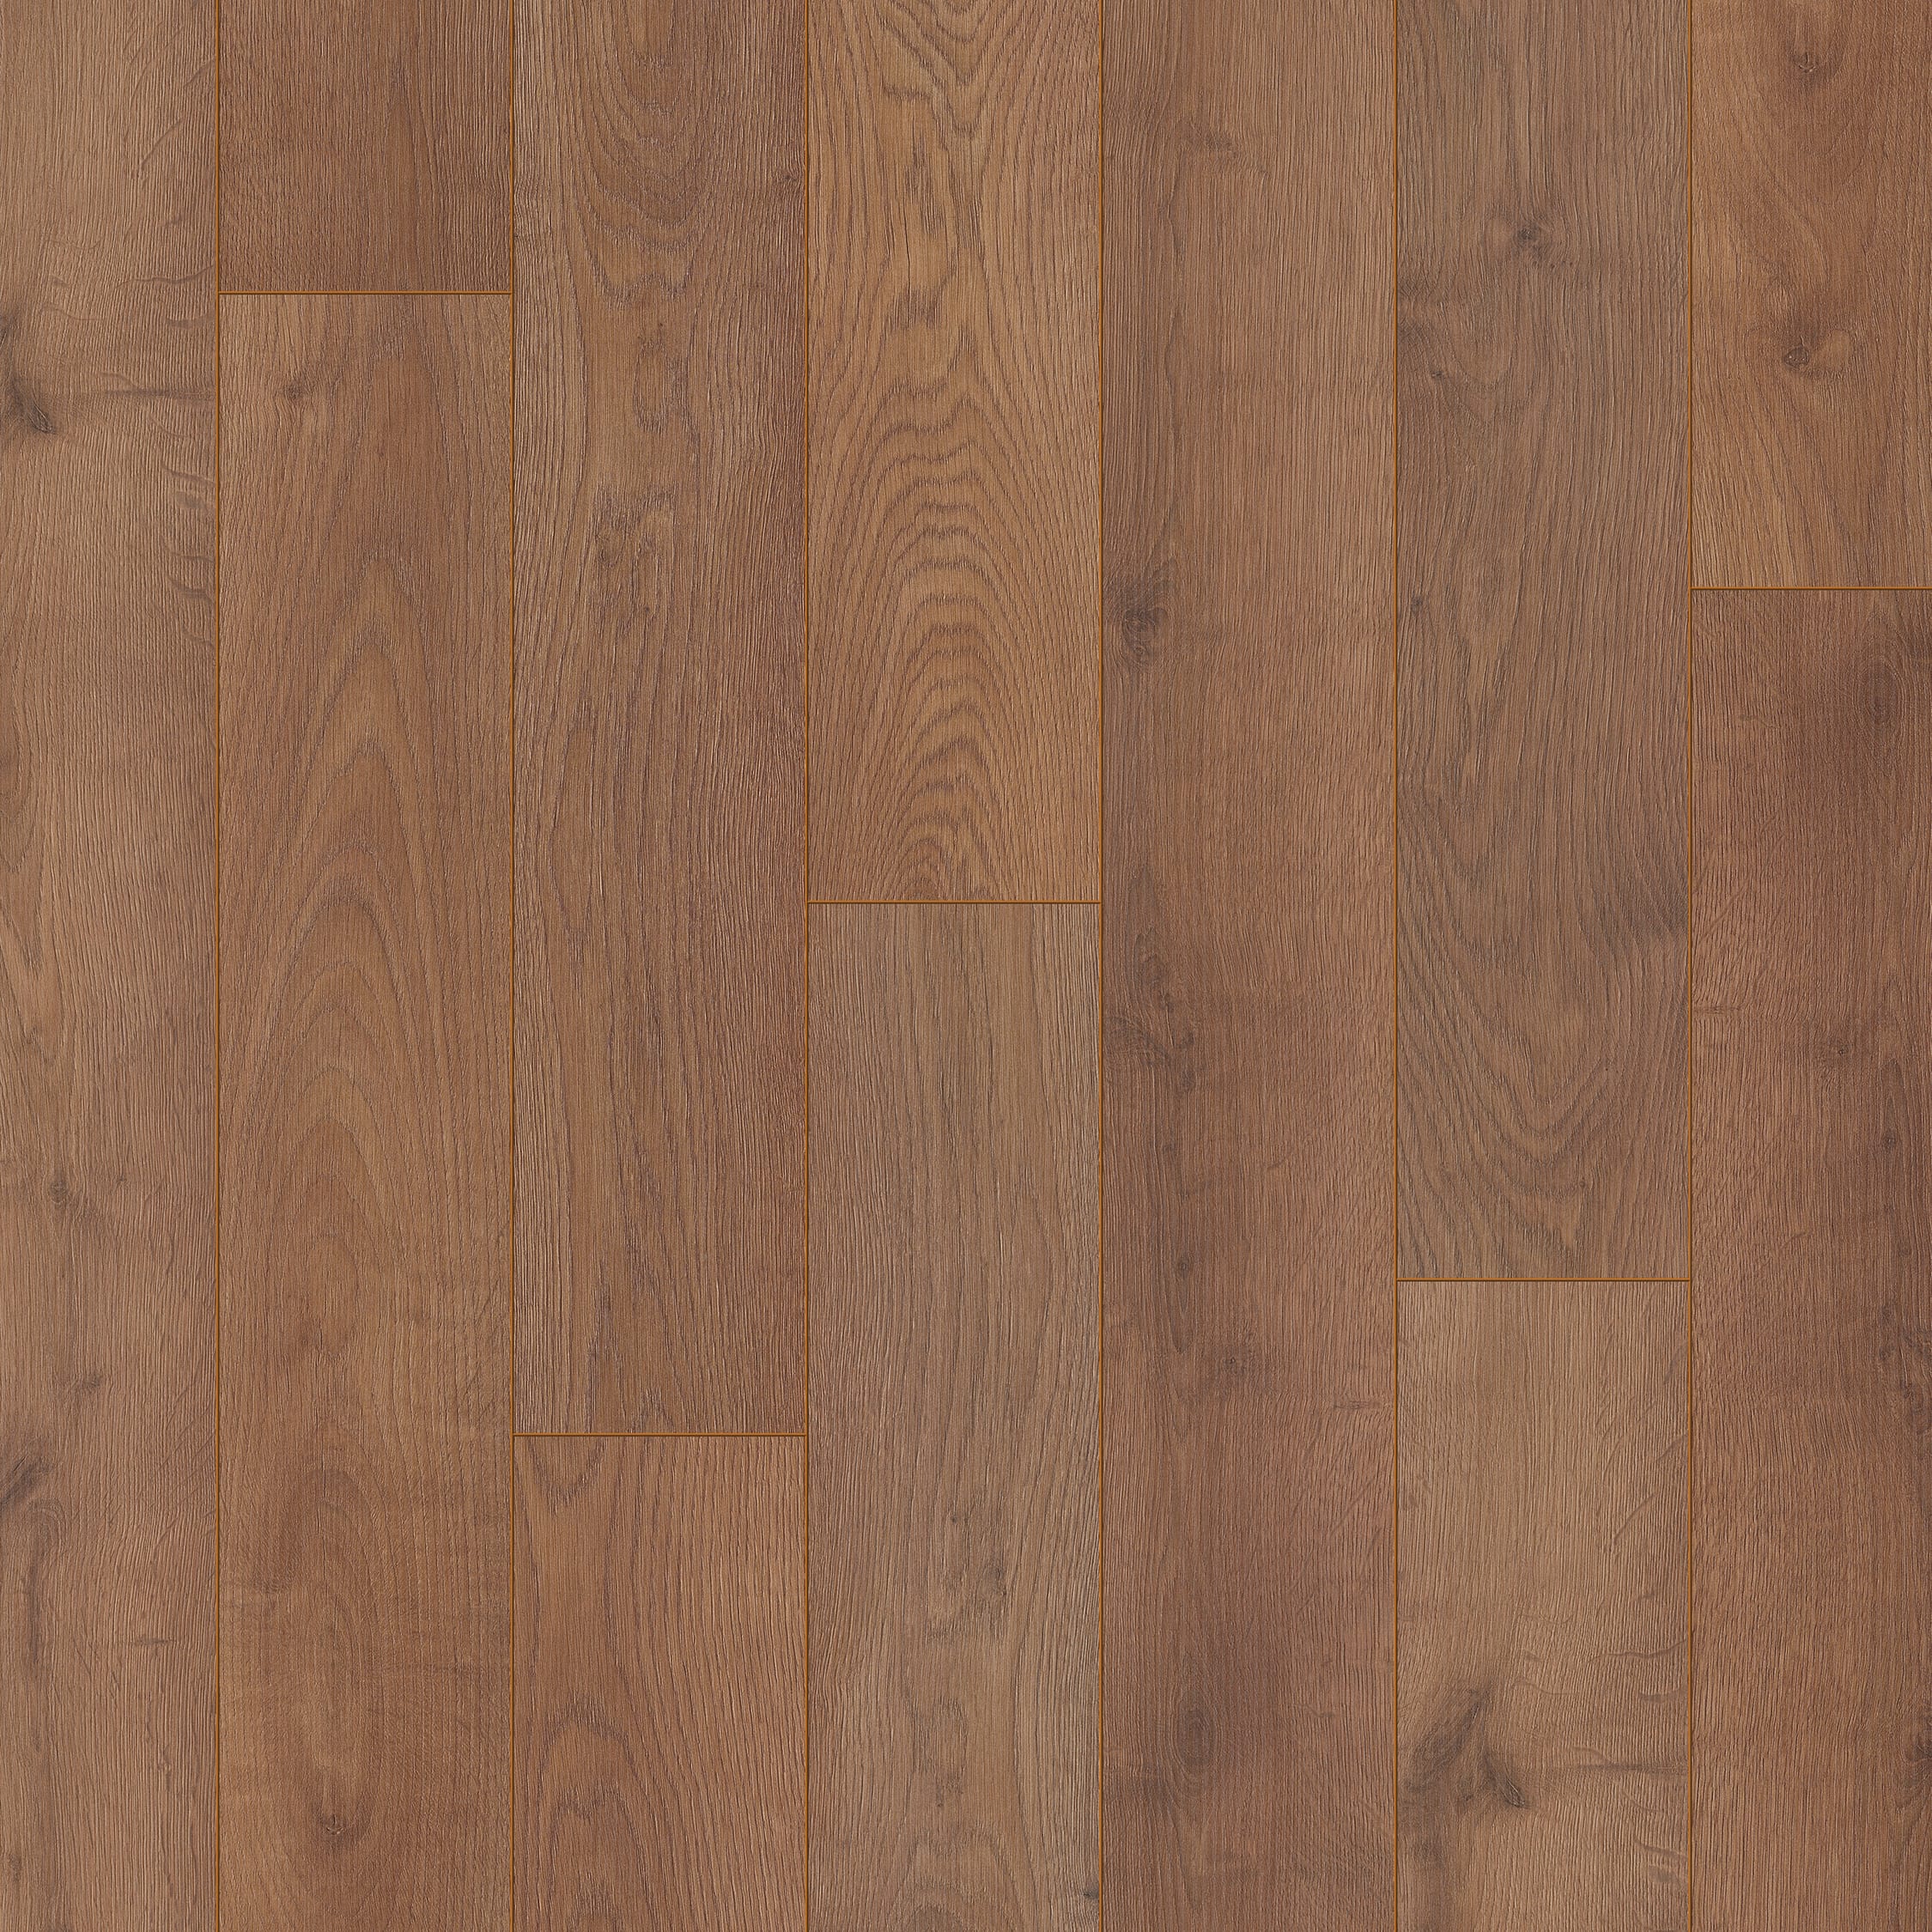 insulator Pebish parti Bergen Brown Oak 12mm Laminate Flooring - 1.48m2 | Wickes.co.uk